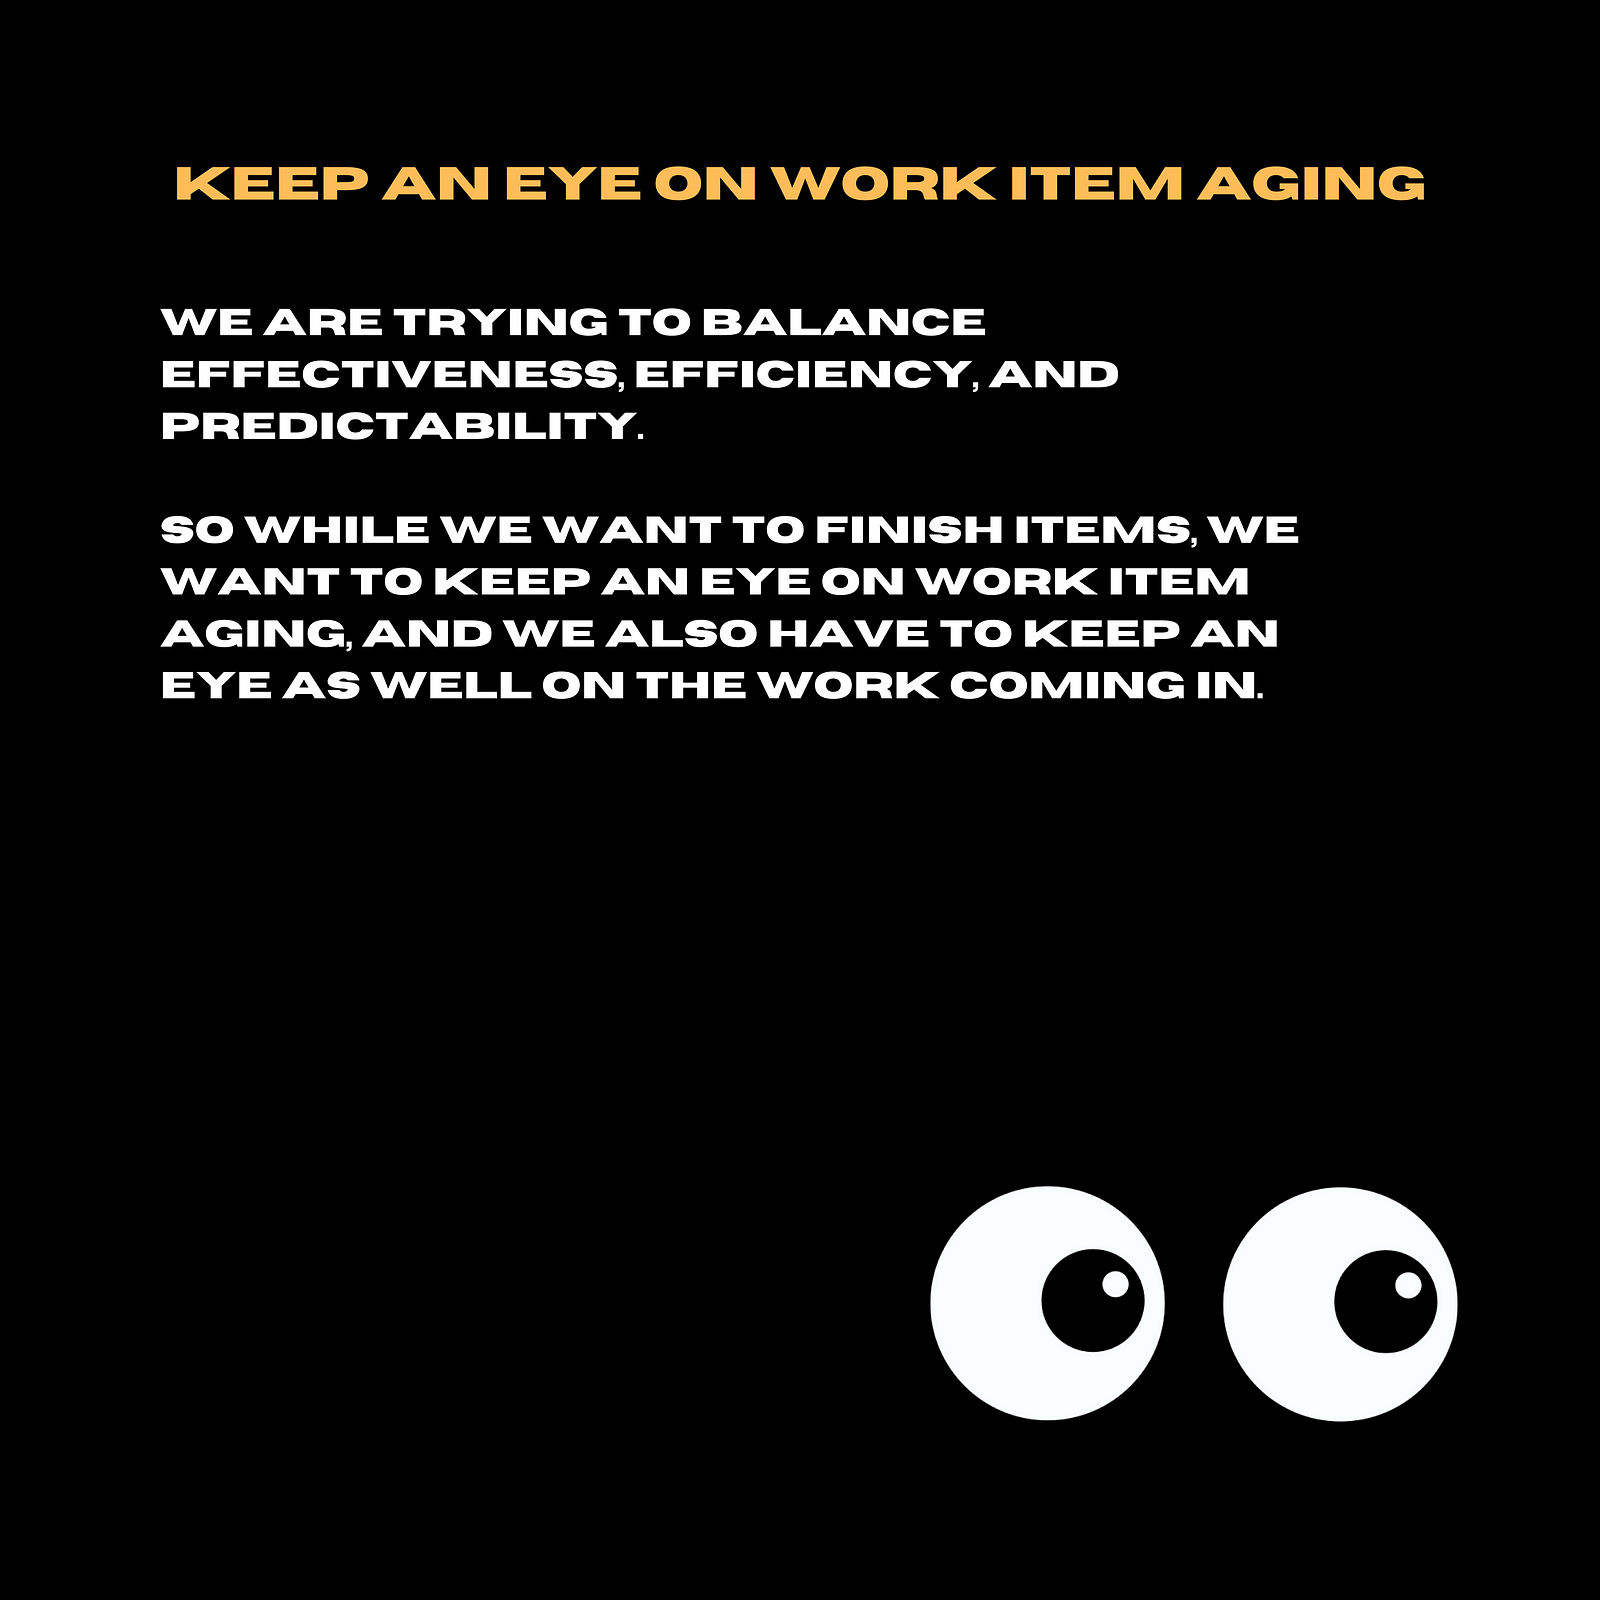 Keep an eye on work item aging